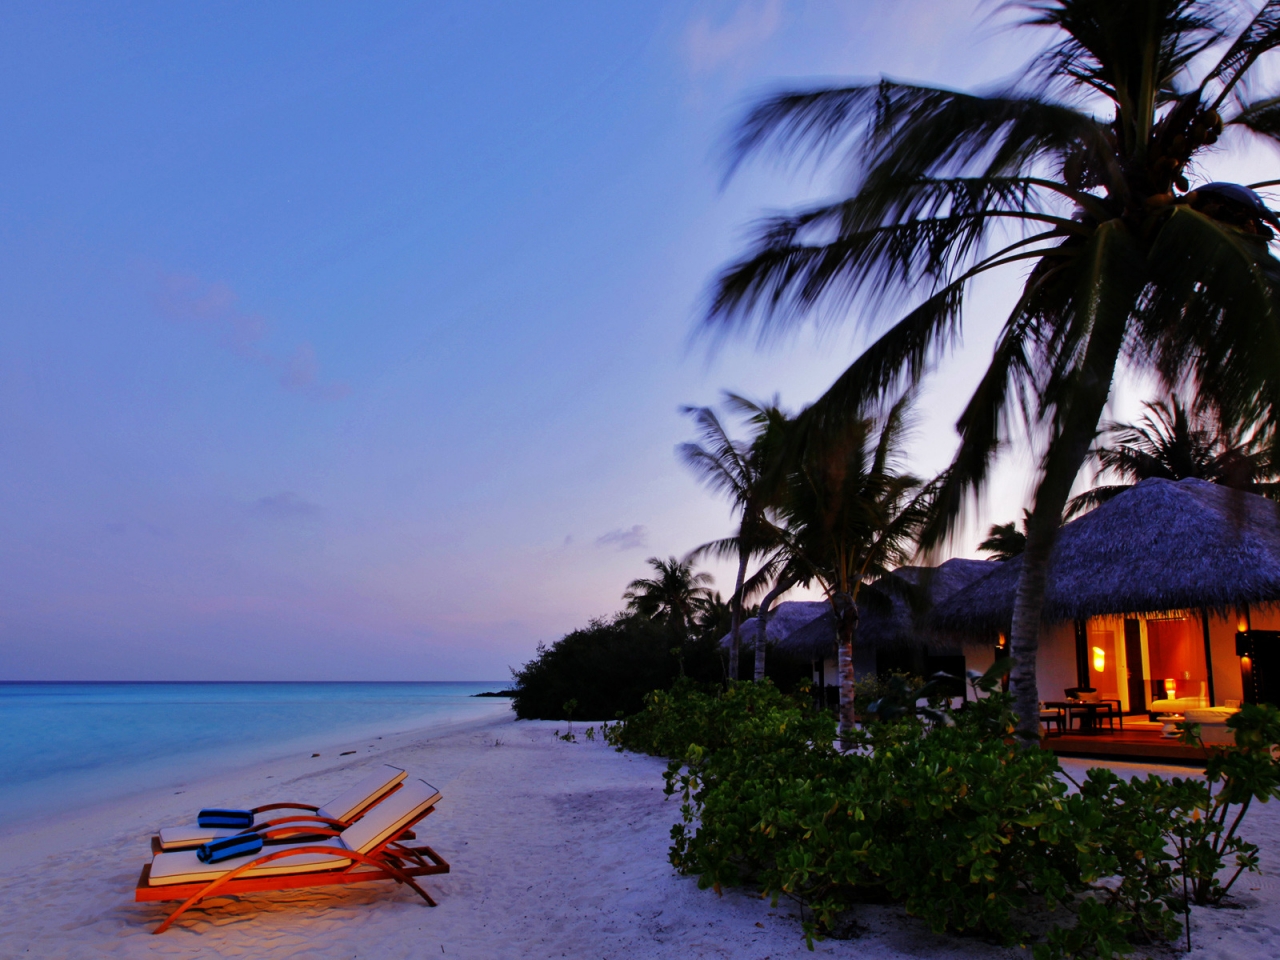 Luxury Beach Resort for 1280 x 960 resolution